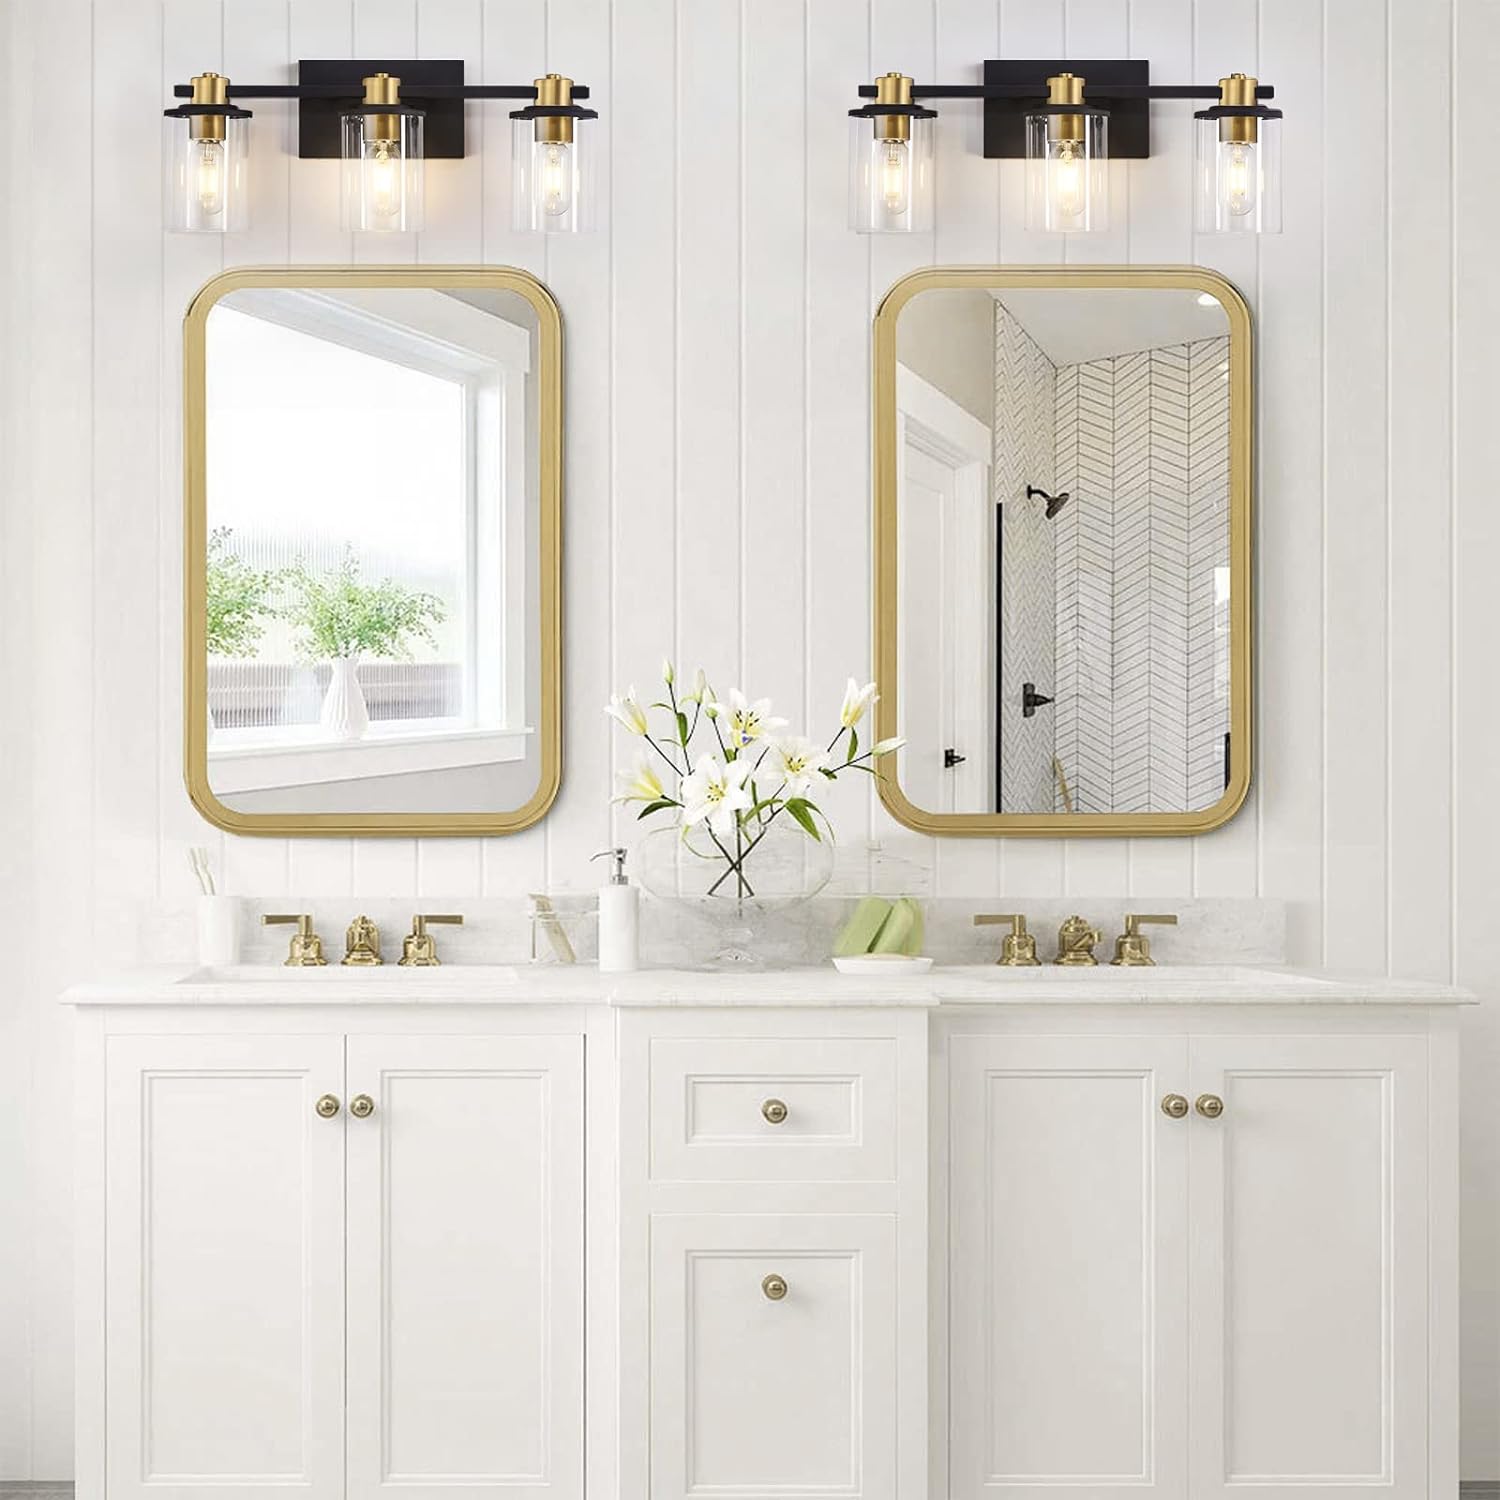 Stambord 3 Light Bathroom Vanity Light, Black and Gold Bathroom Light Fixtures, Sconces Wall Lighting with Glass Shade, Modern Brushed Gold Vanity Lights for Bathroom, Bedroom, Hallway